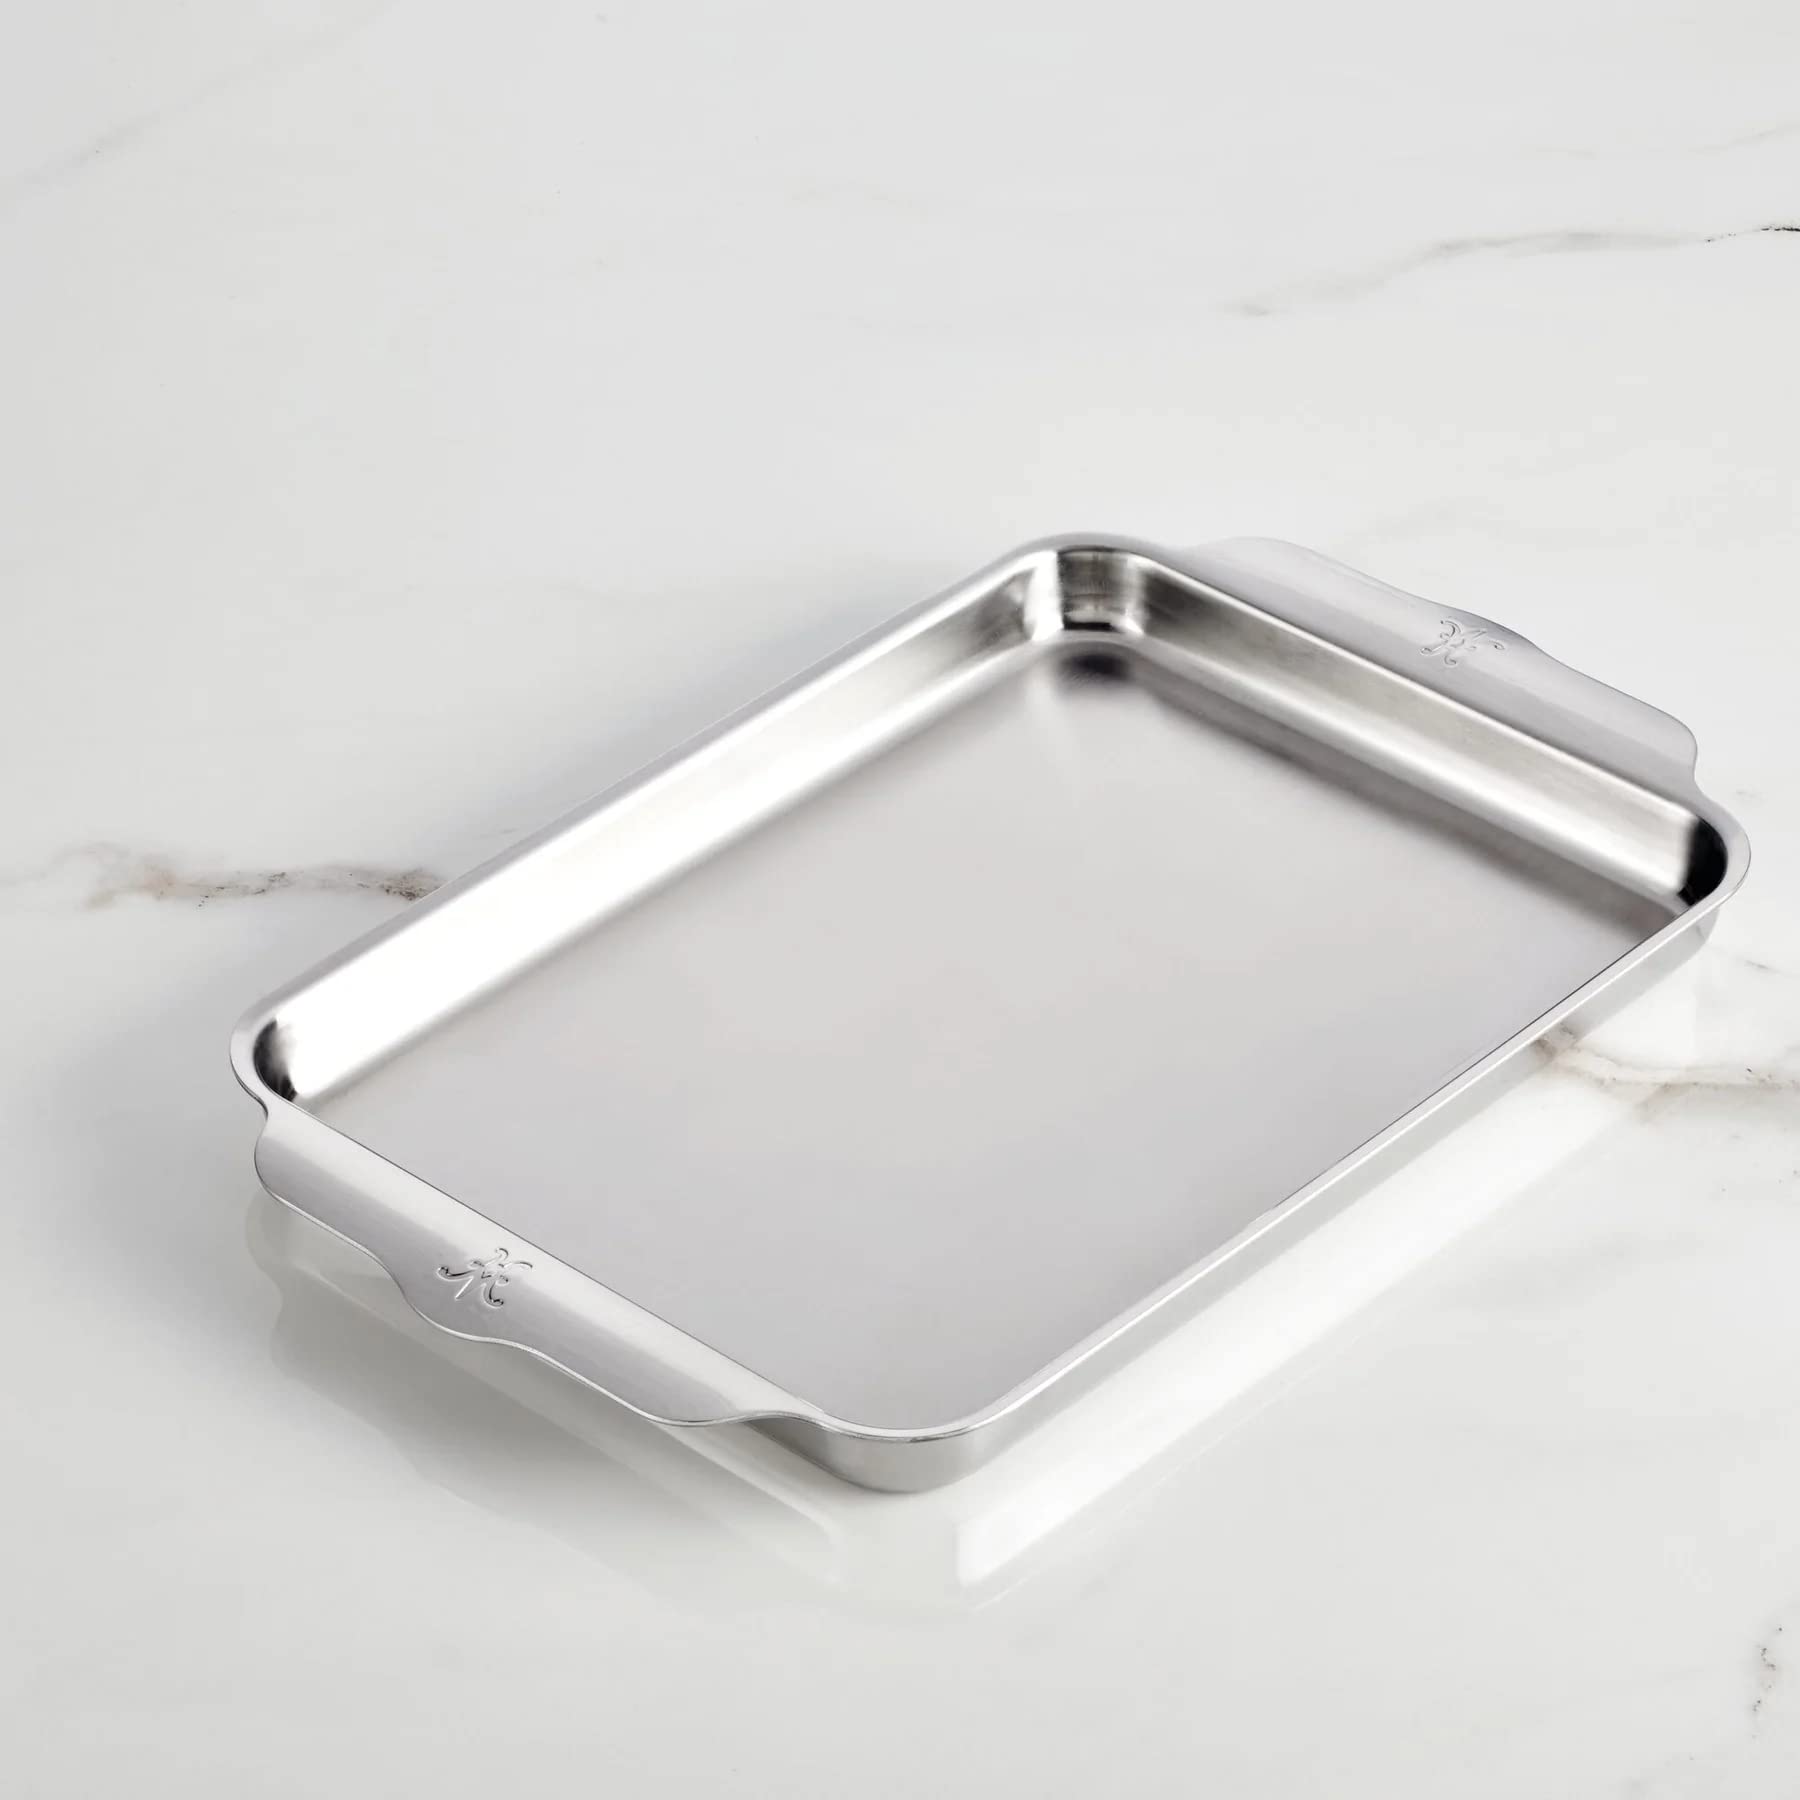 Hestan Provisions OvenBond Medium Sheet Pan, 12-Inch x 15-Inch